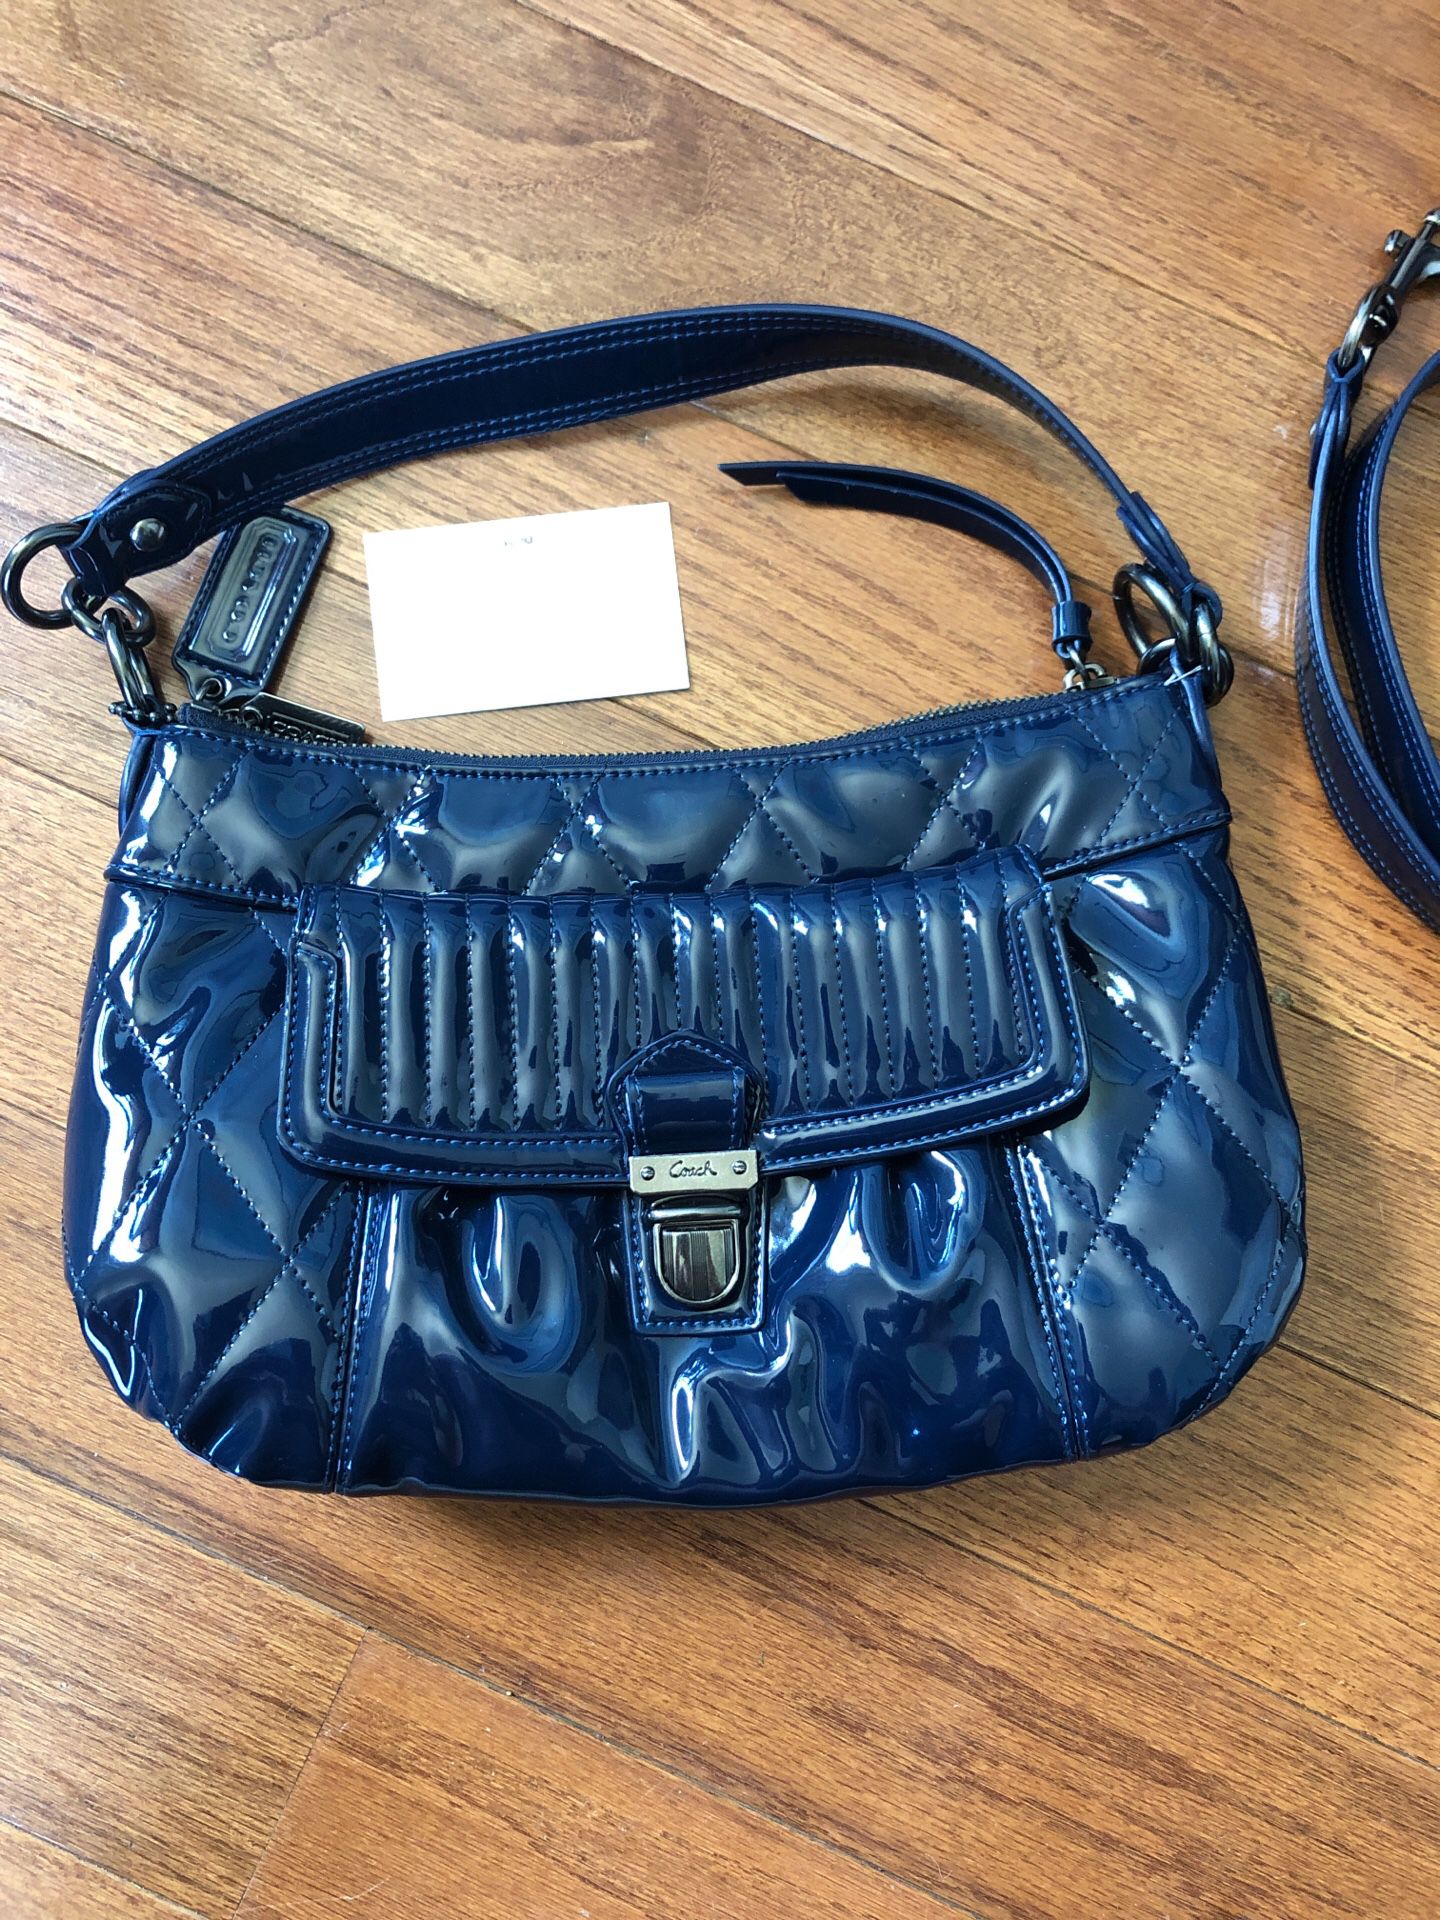 Brand new Coach purse patent leather satchel crossbody bag